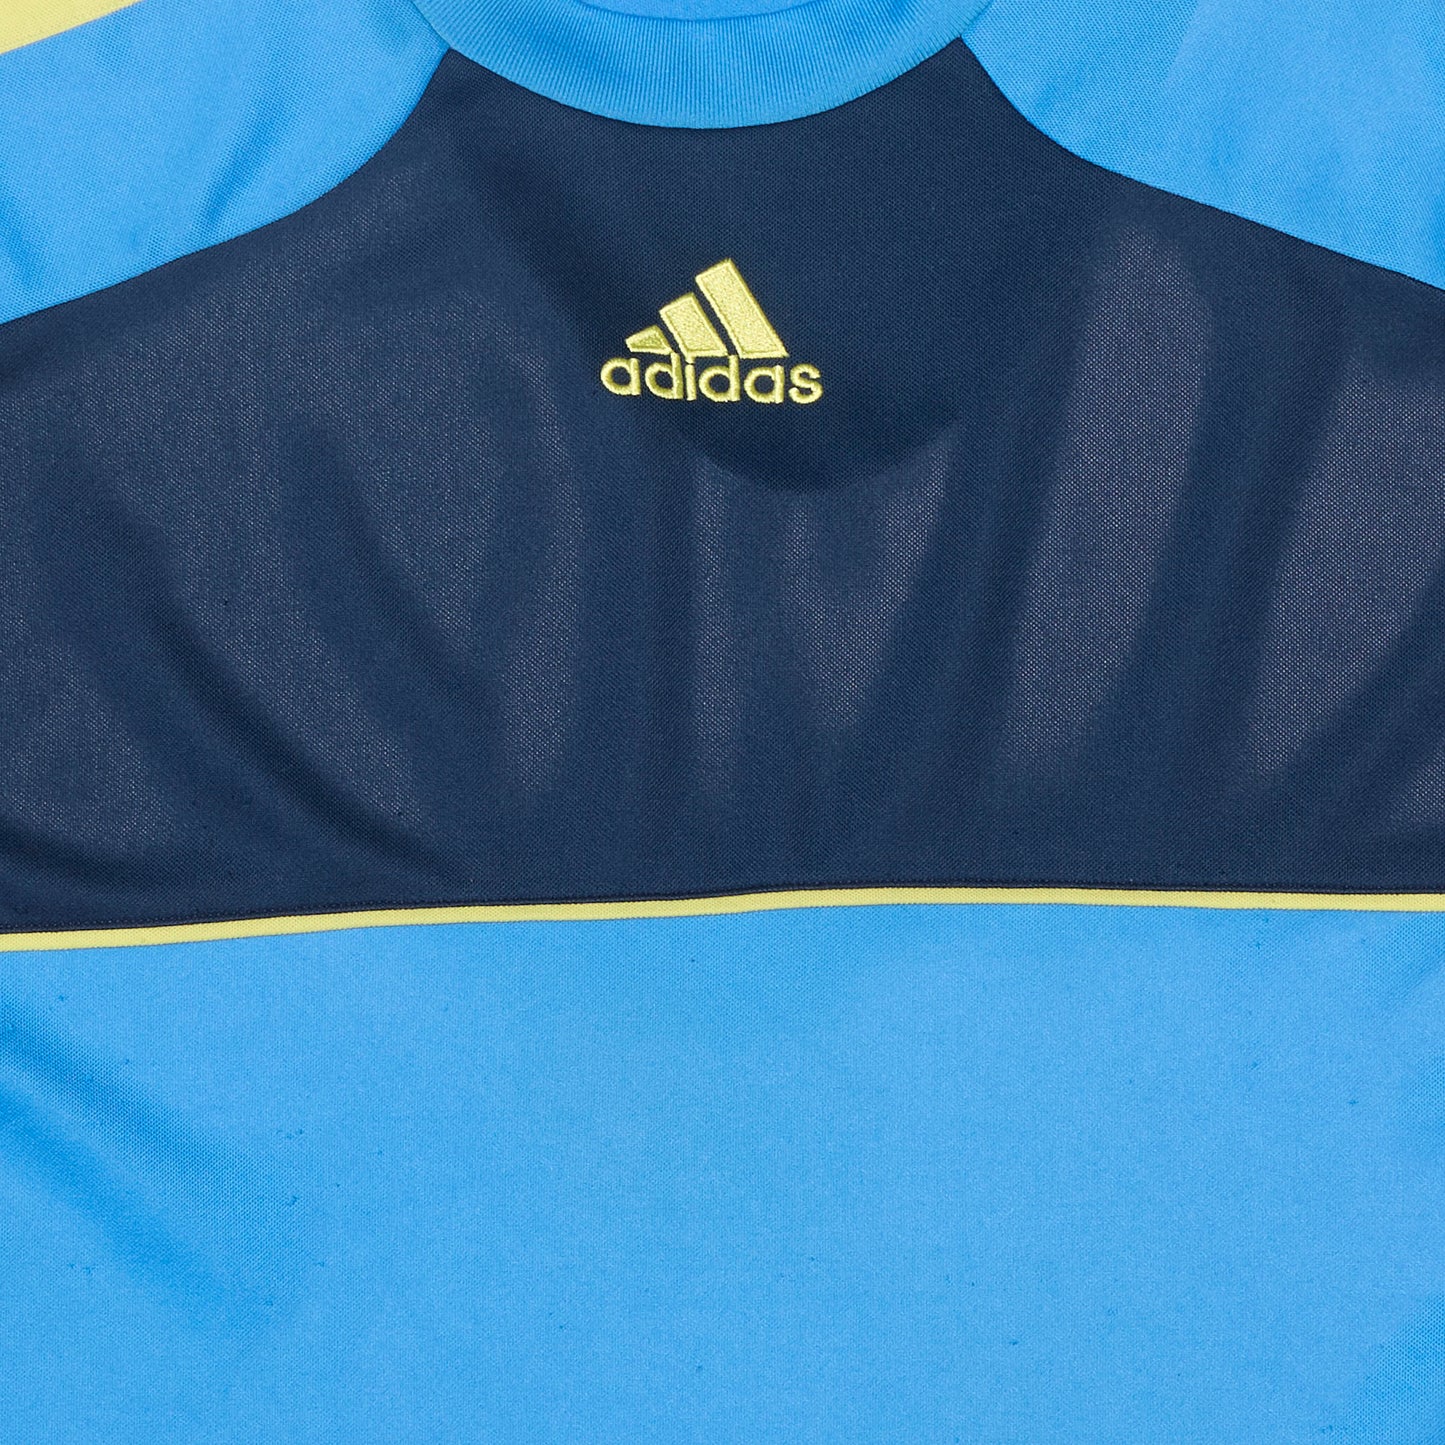 Adidas   Longsleeve Sports Shirt - XL